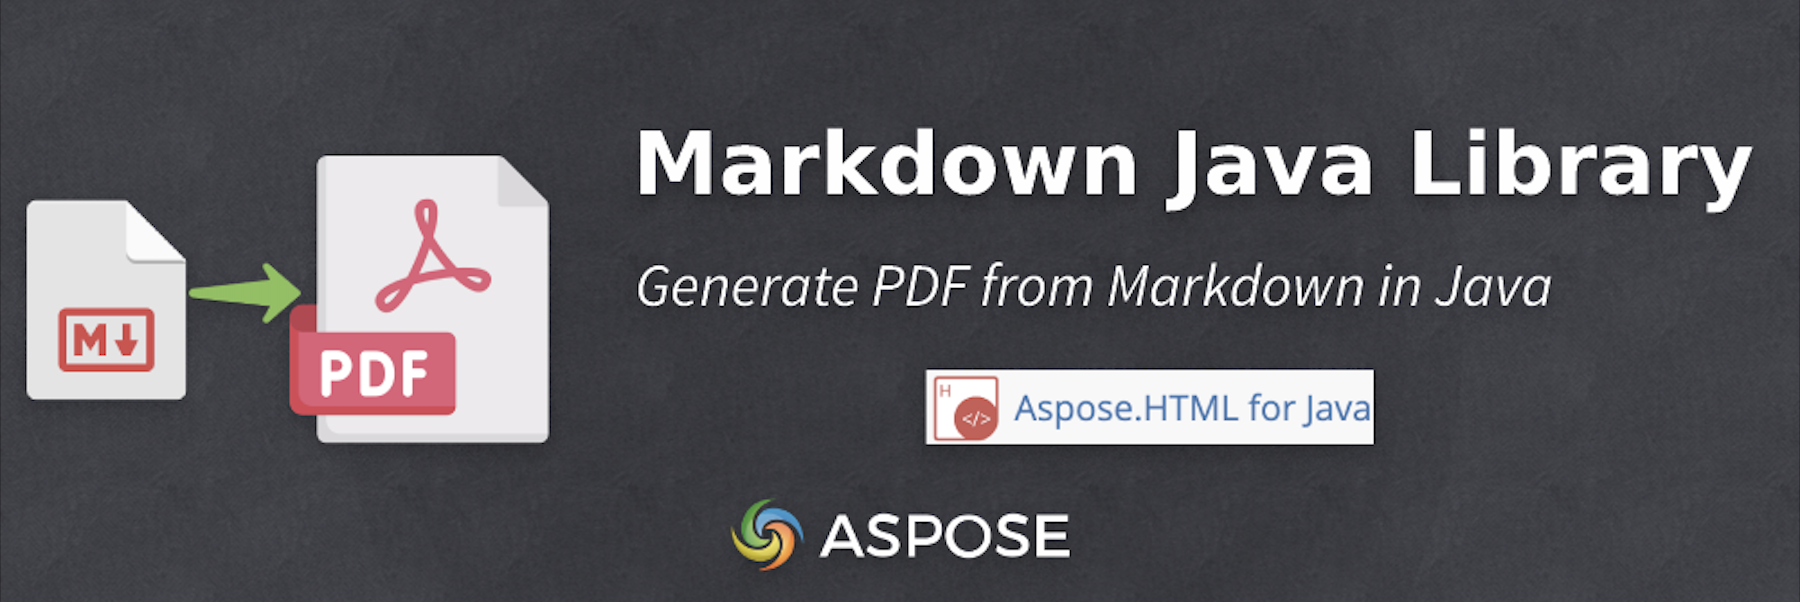 Java'da Markdown'dan PDF oluşturun - Markdown'dan PDF'ye